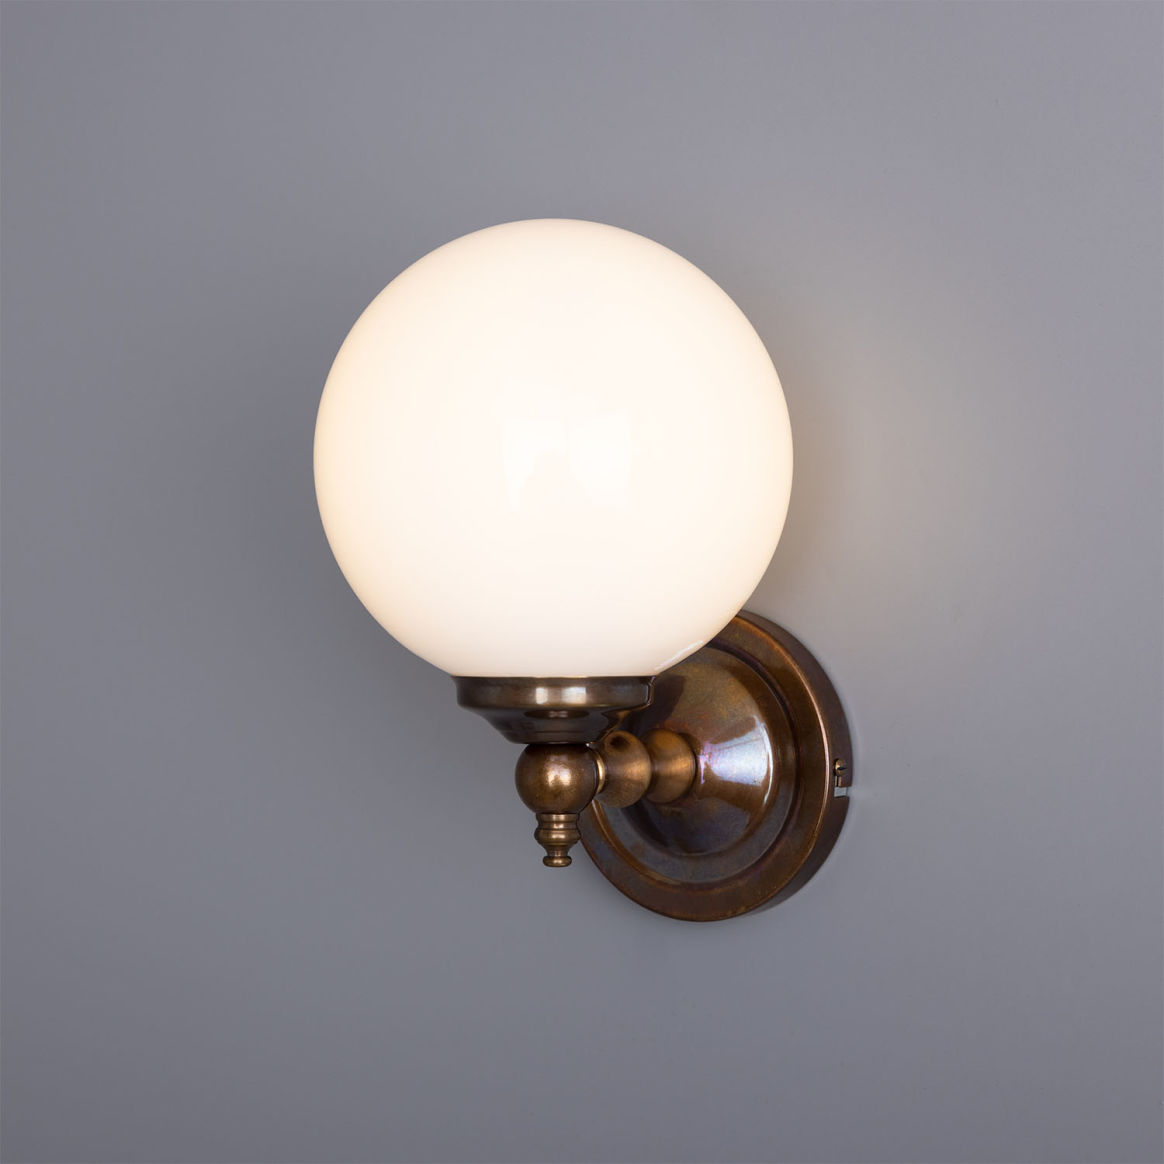 Lampe en perles de polymère – Mienville Lanfranchi